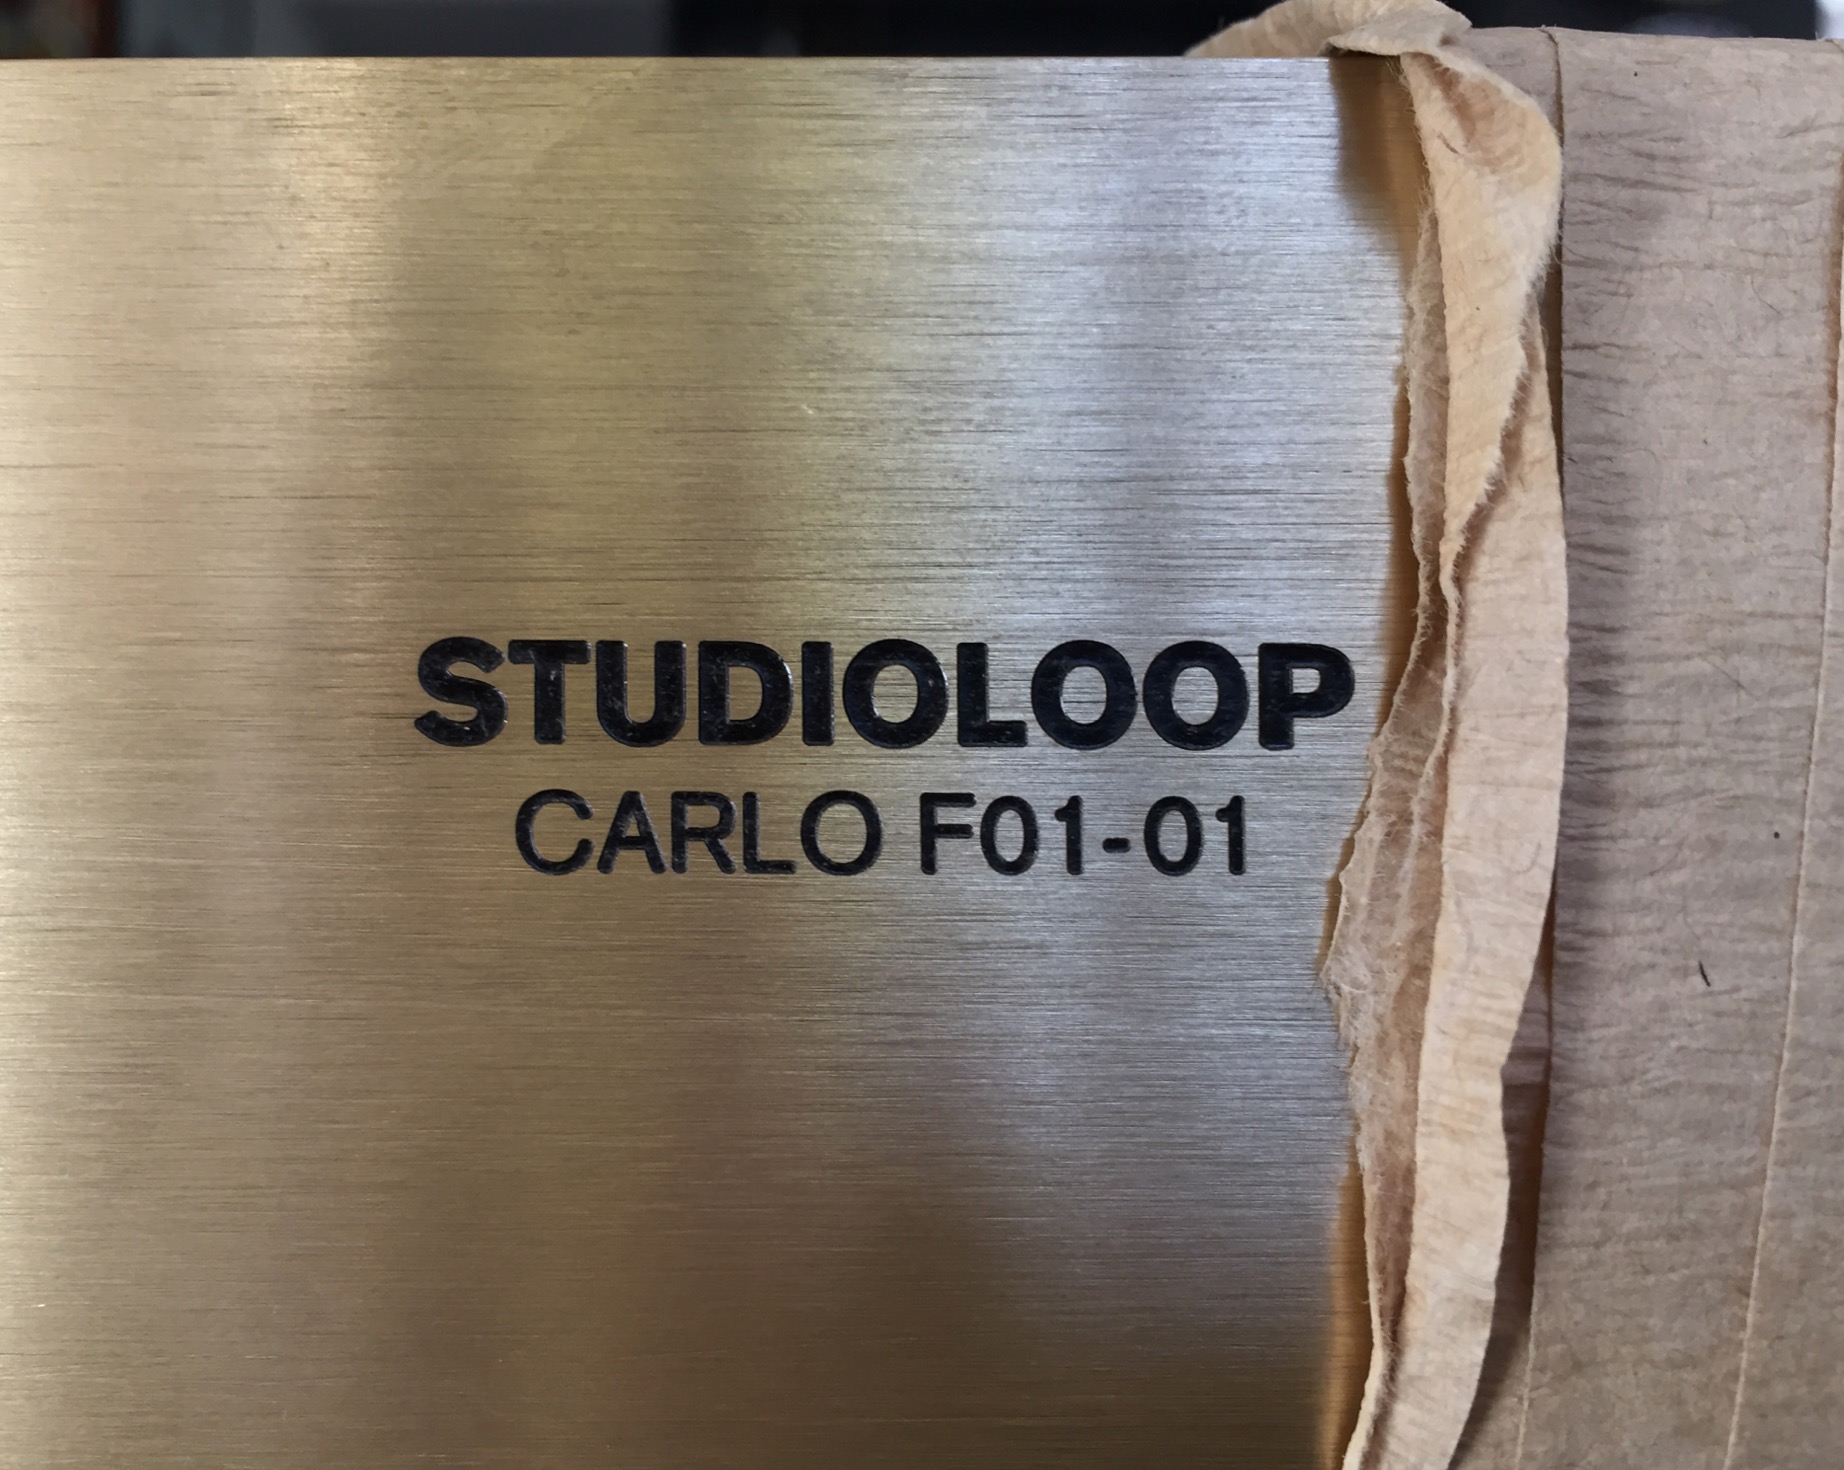 Studioloop Furniture in Production